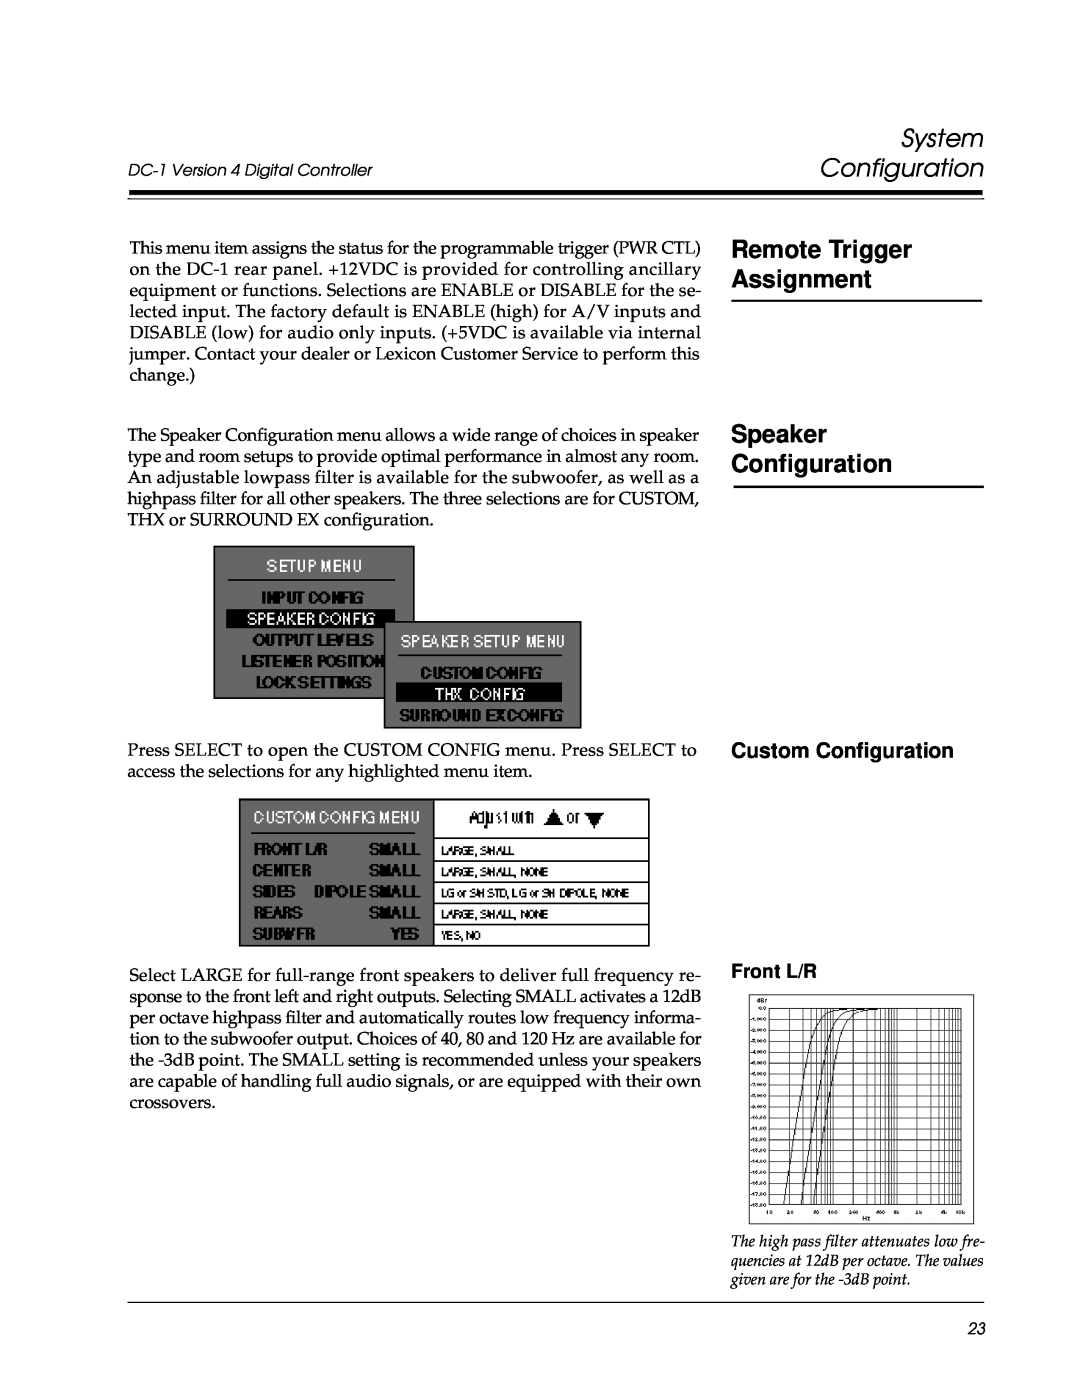 Lexicon Lexicon Part #070-13234 Speaker Configuration, Remote Trigger Assignment, Custom Configuration, Front L/R 